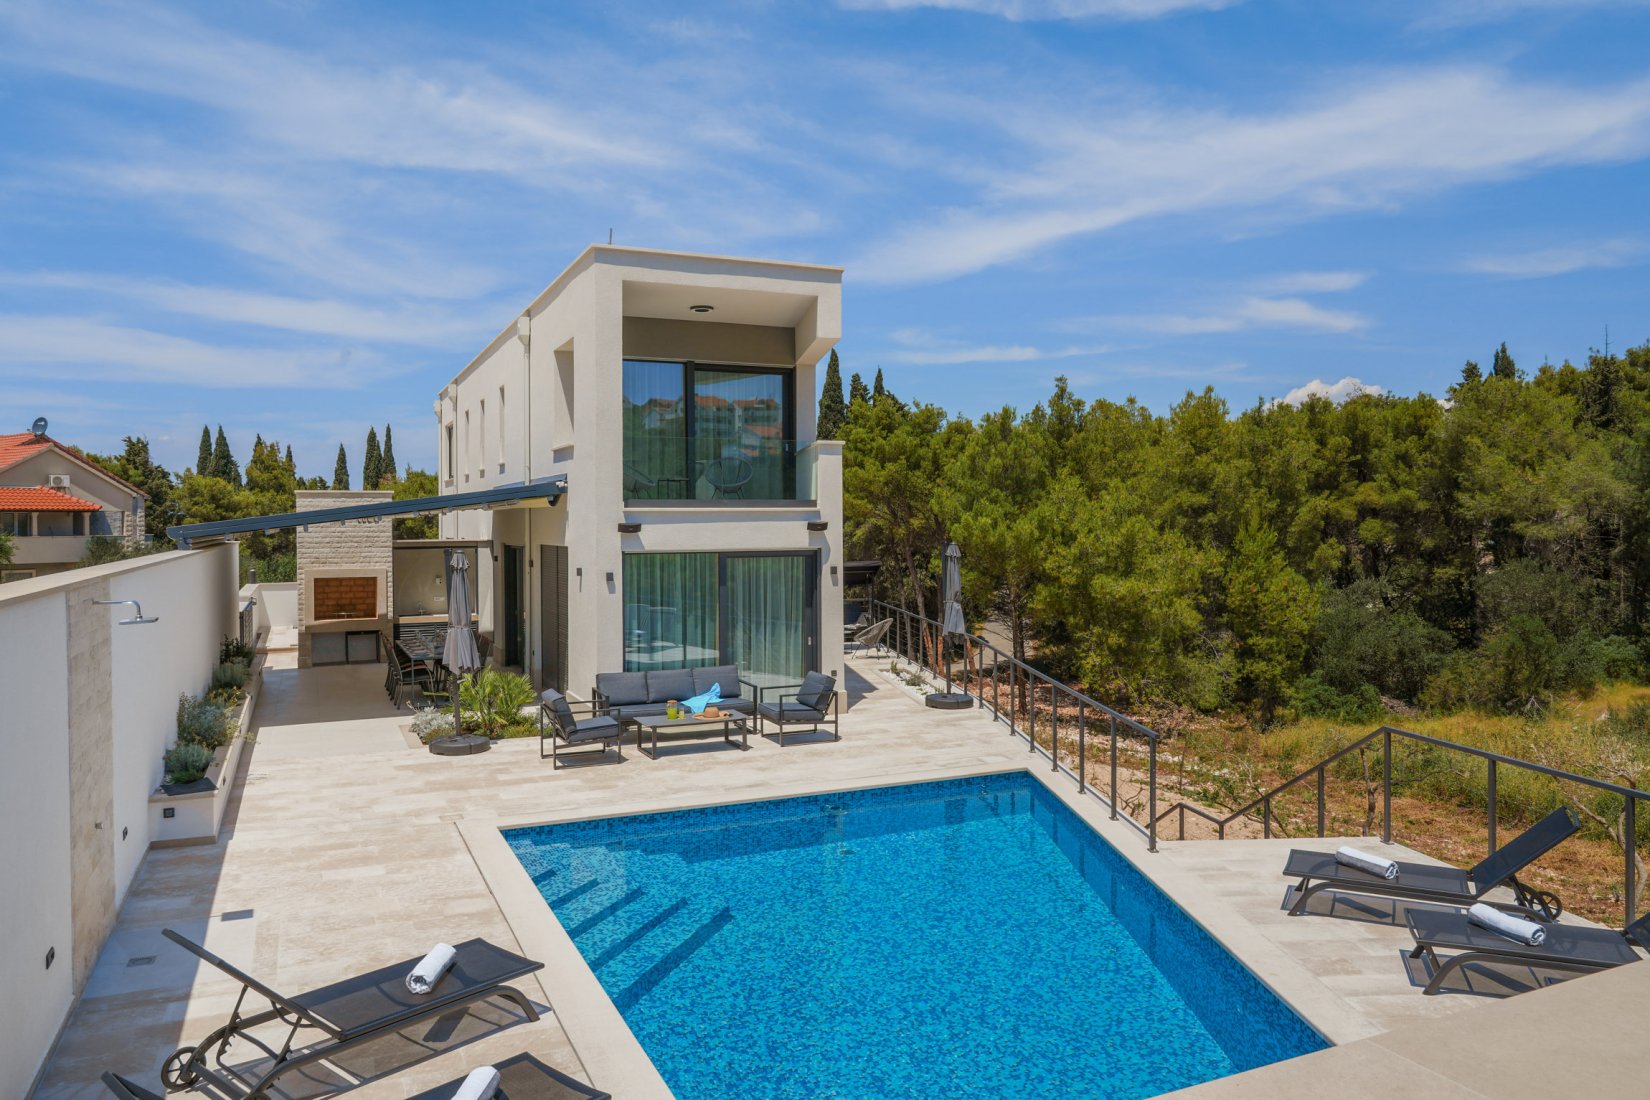 BRAC LUXURY VILLAS - Luxury Villa Supetar Aquamarin with pool on island of Brac in town of Supetar